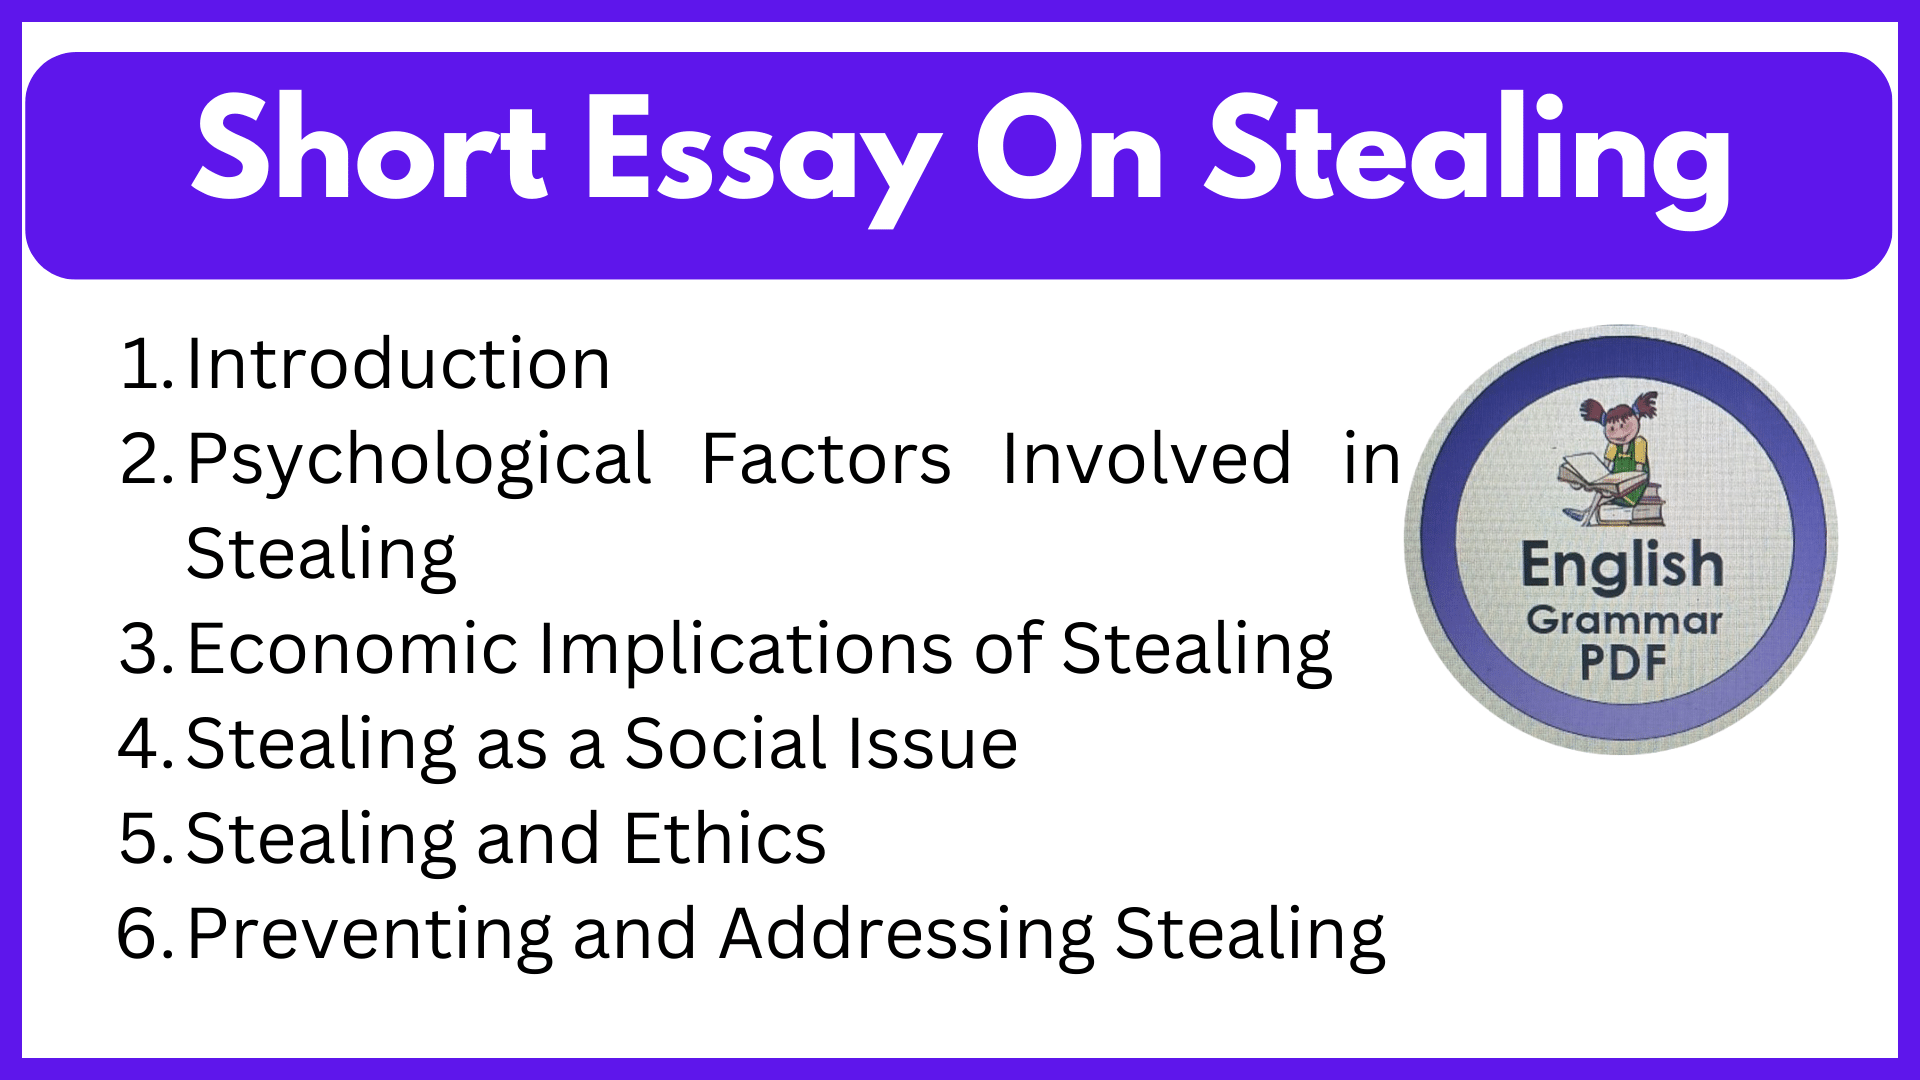 Short Essay On Stealing